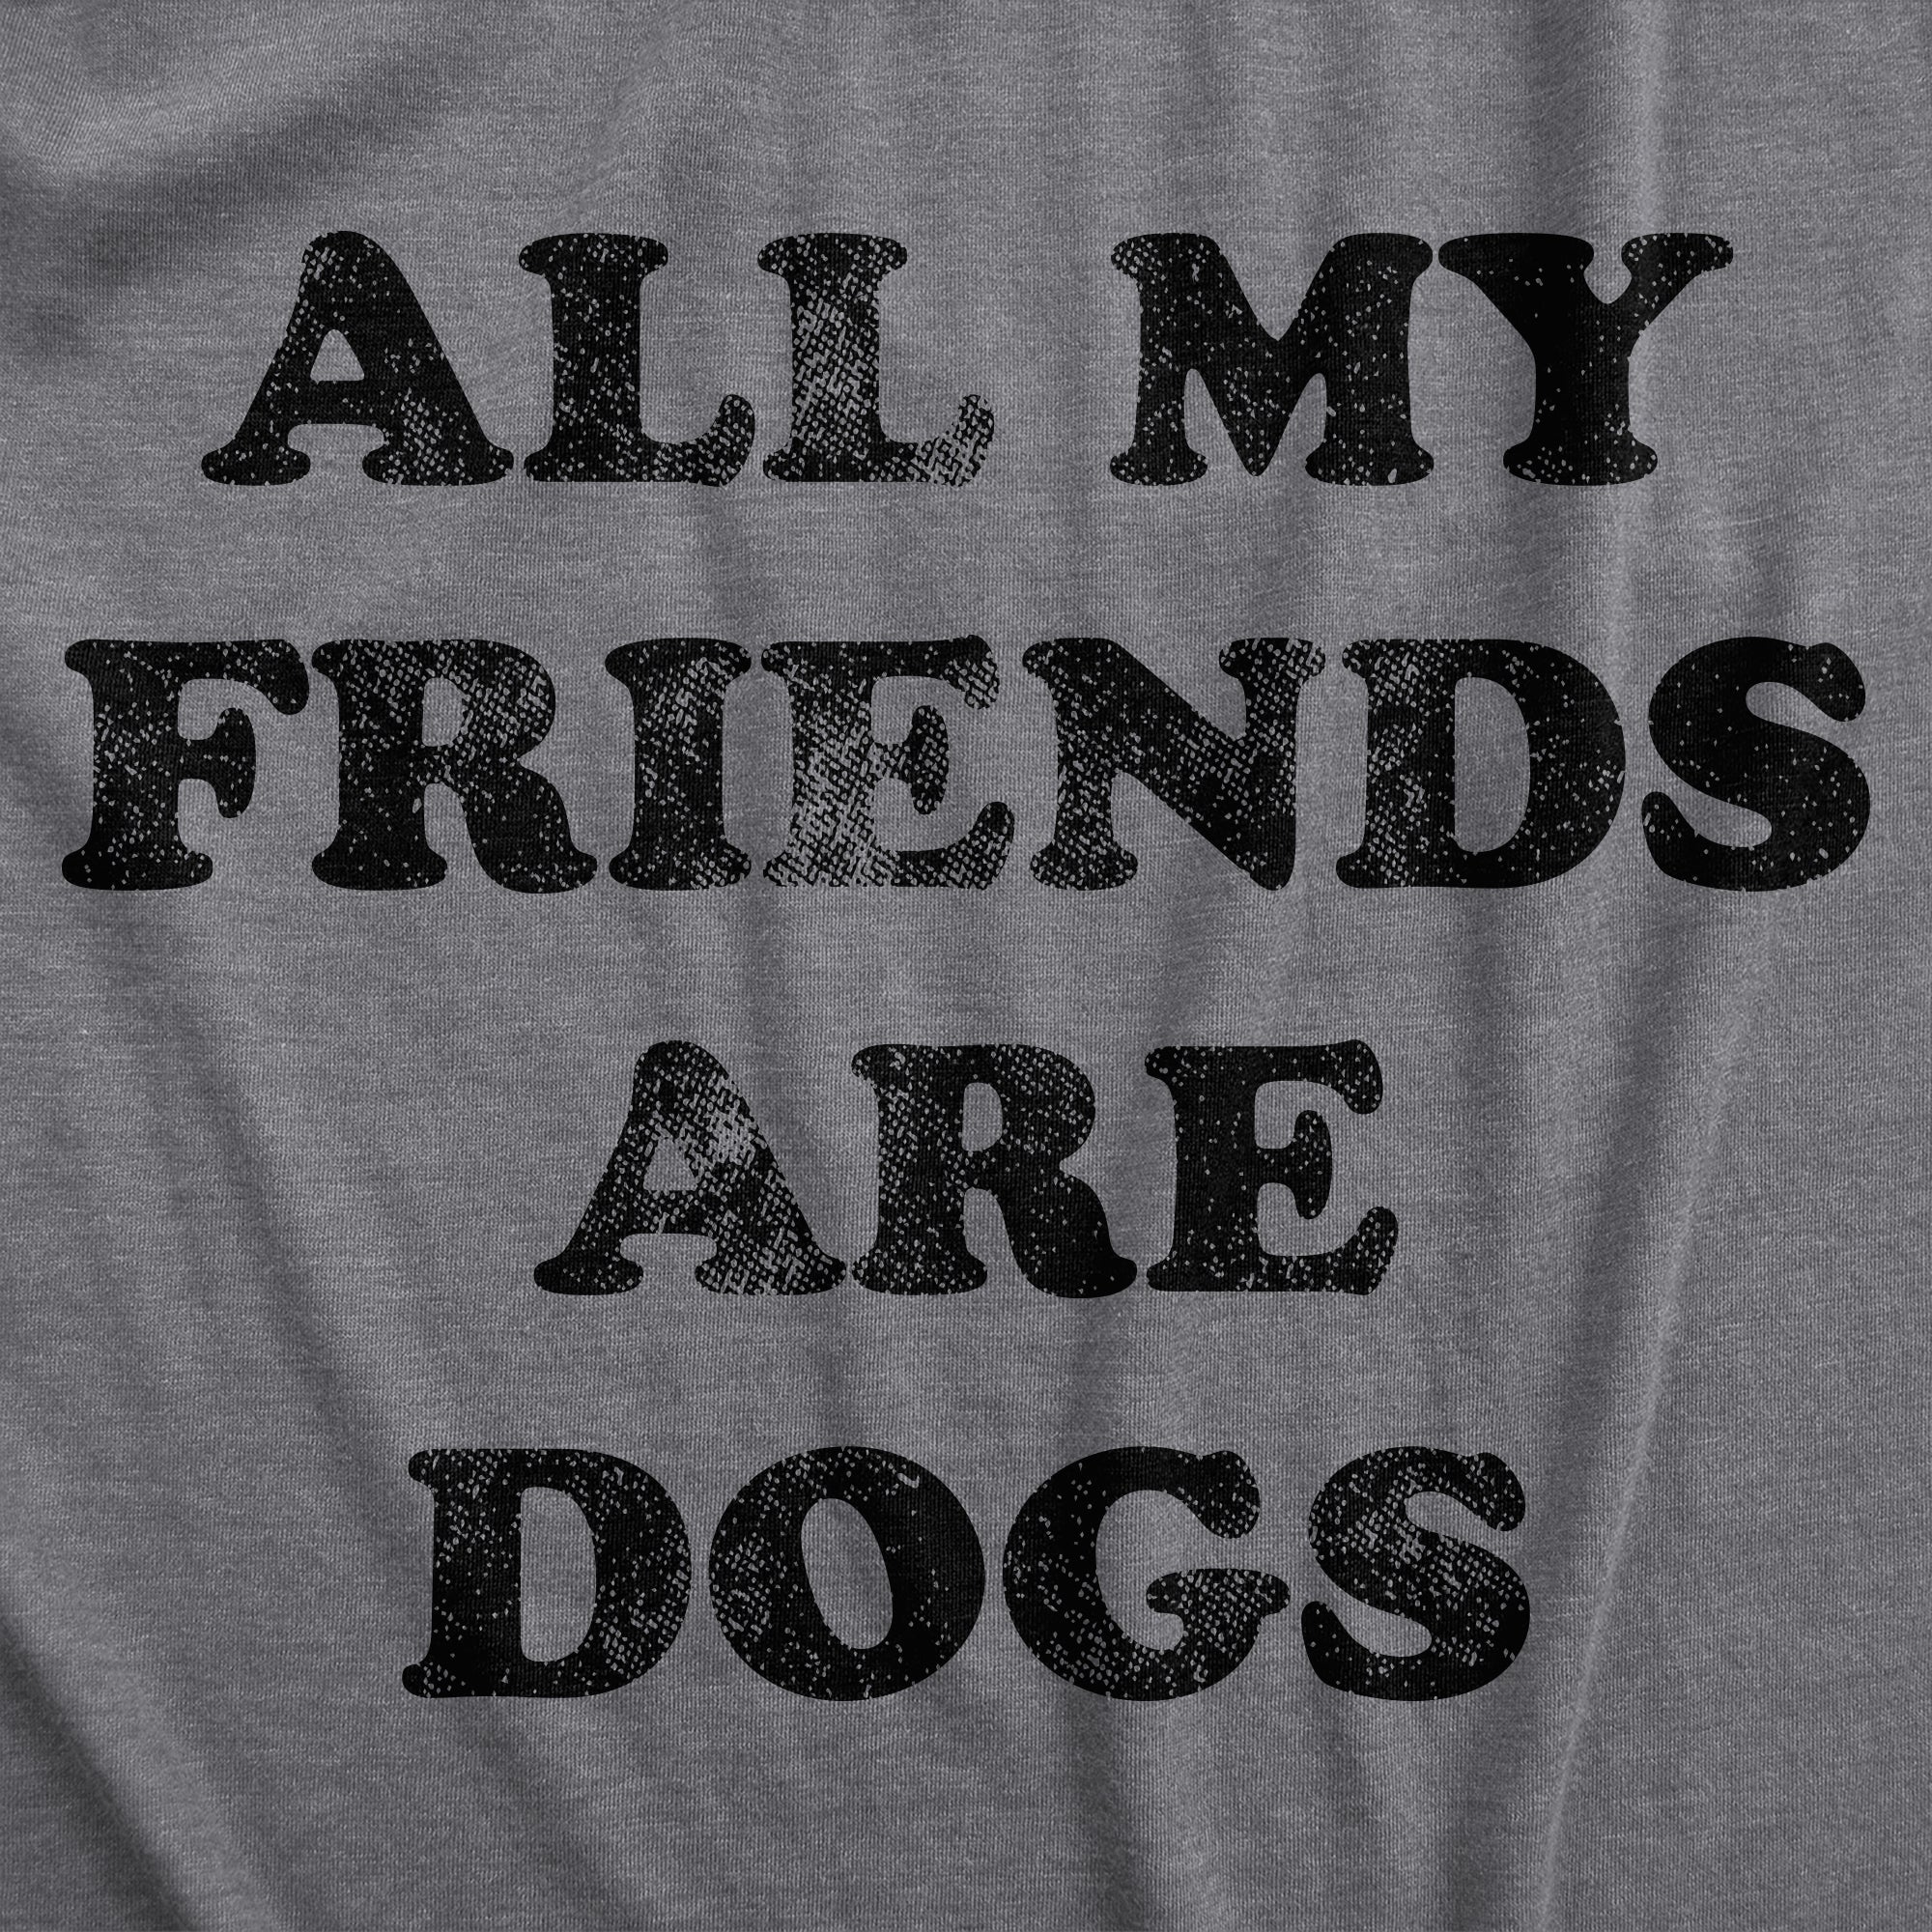 Funny Dark Heather Grey - FRIENDSDOGS All My Friends Are Dogs Womens T Shirt Nerdy Dog Introvert Tee